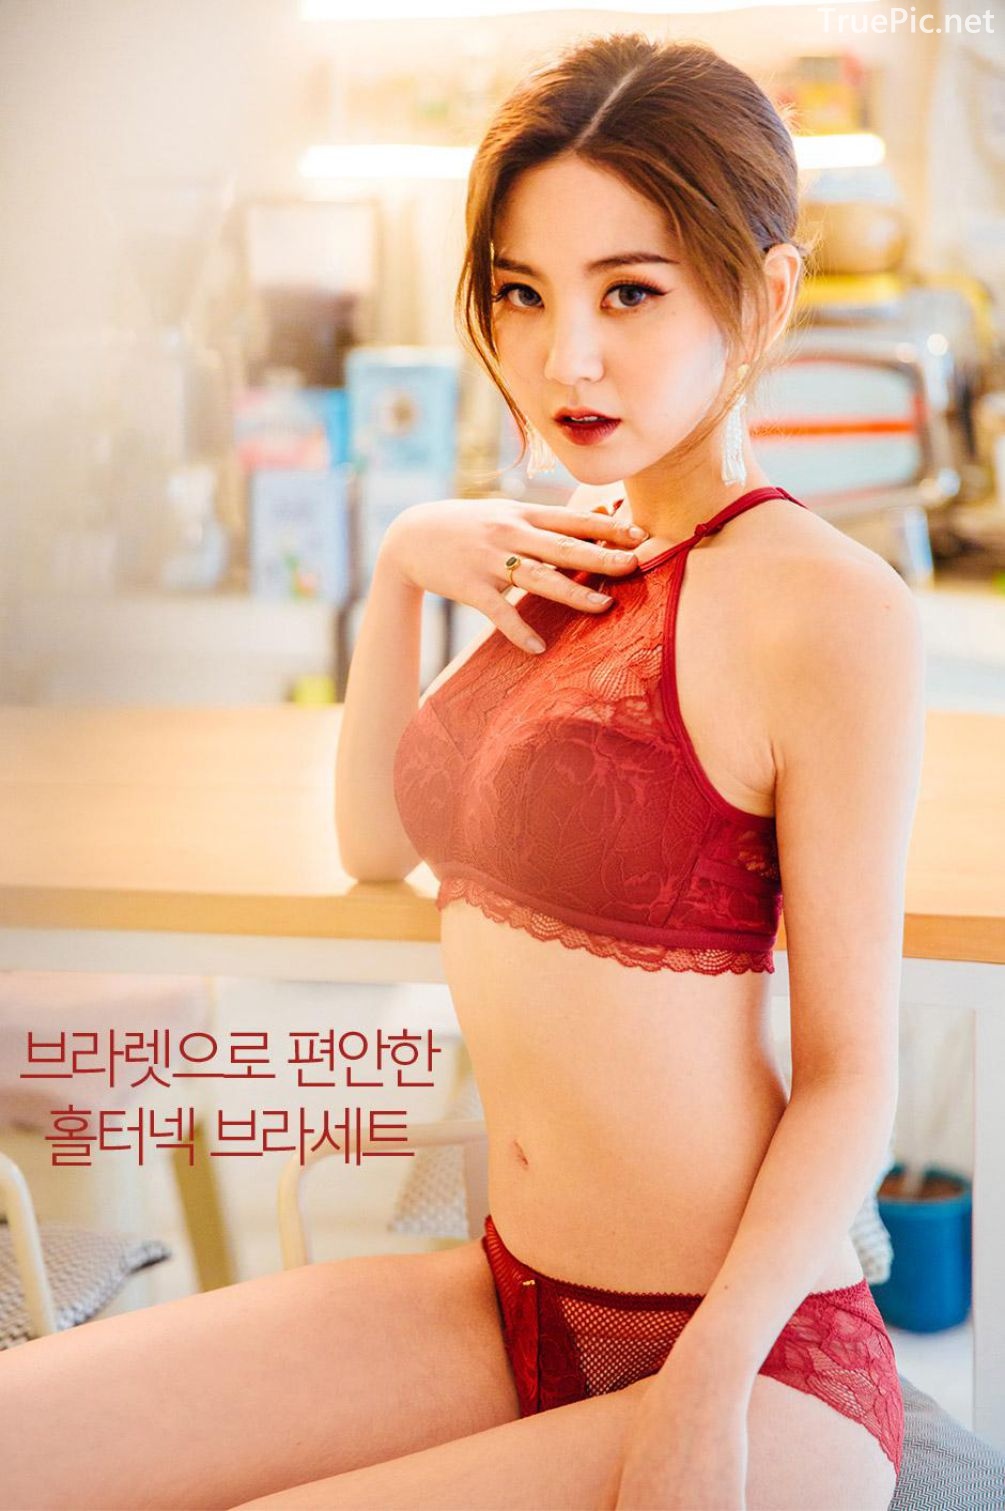 Korean Lingerie Queen - Lee Chae Eun - Red and Black Rabbit Lingerie - TruePic.net - Picture 11